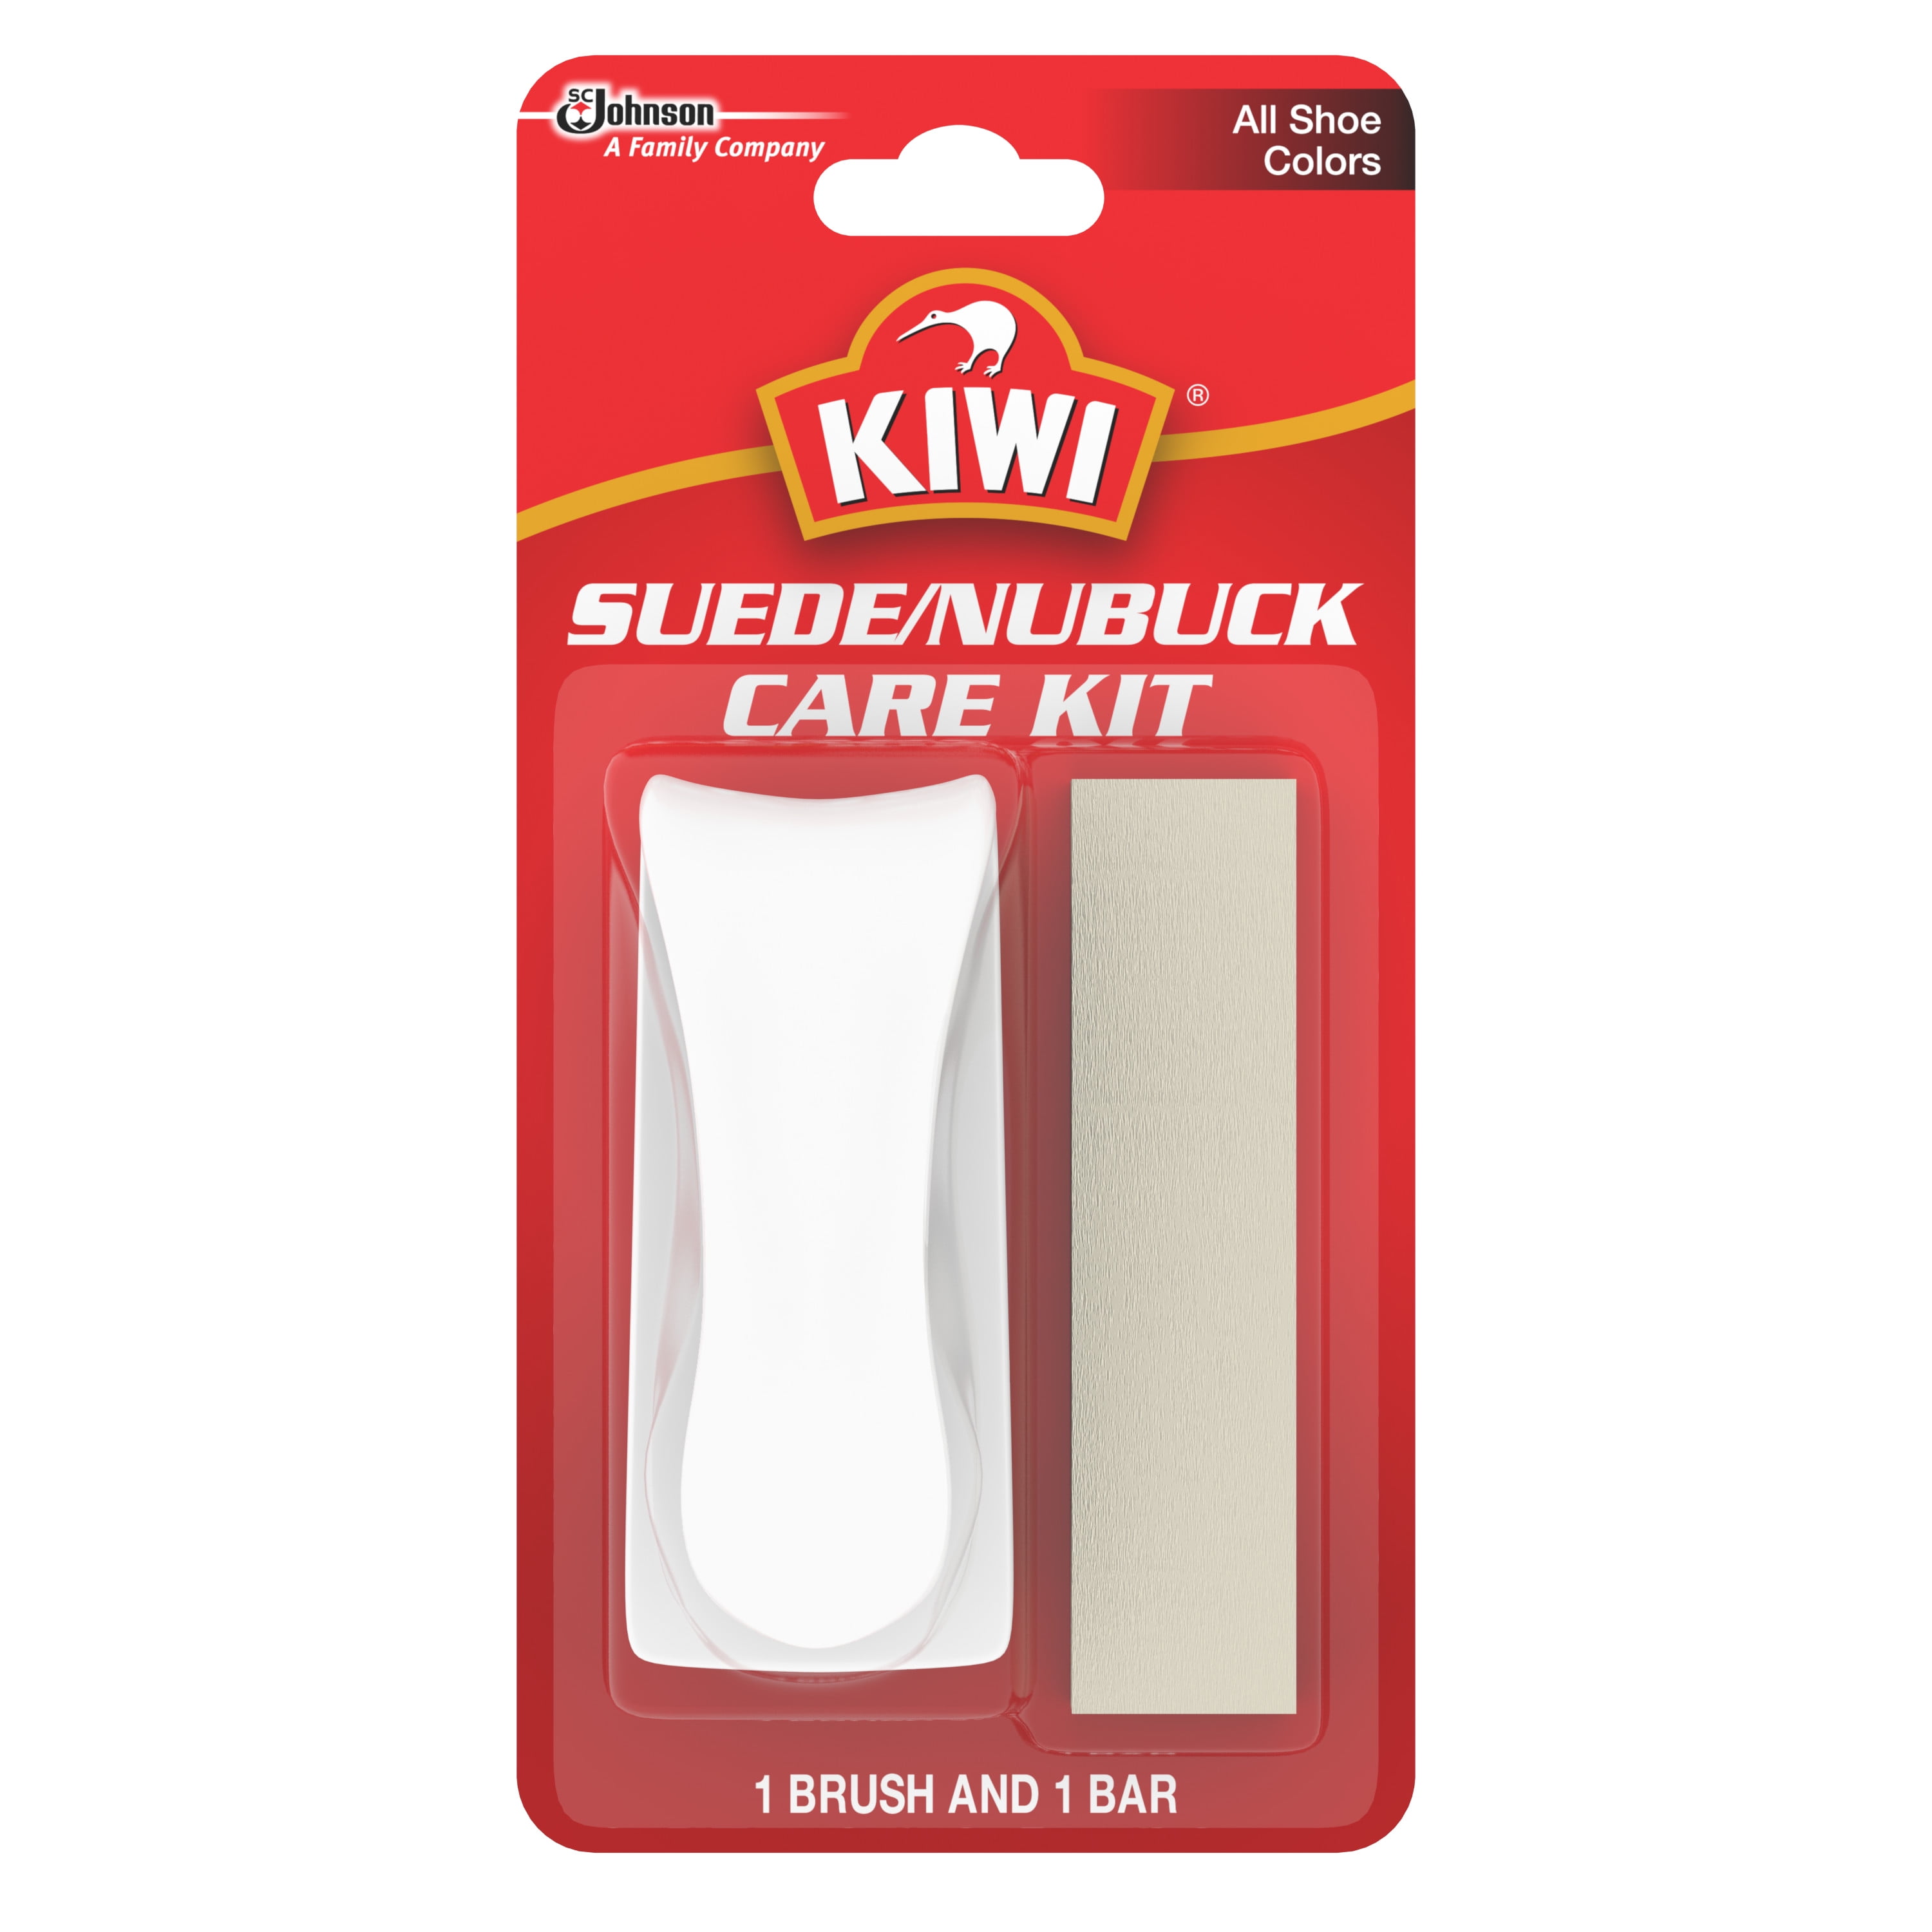 KIWI Suede \u0026 Nubuck Care Kit - Walmart 